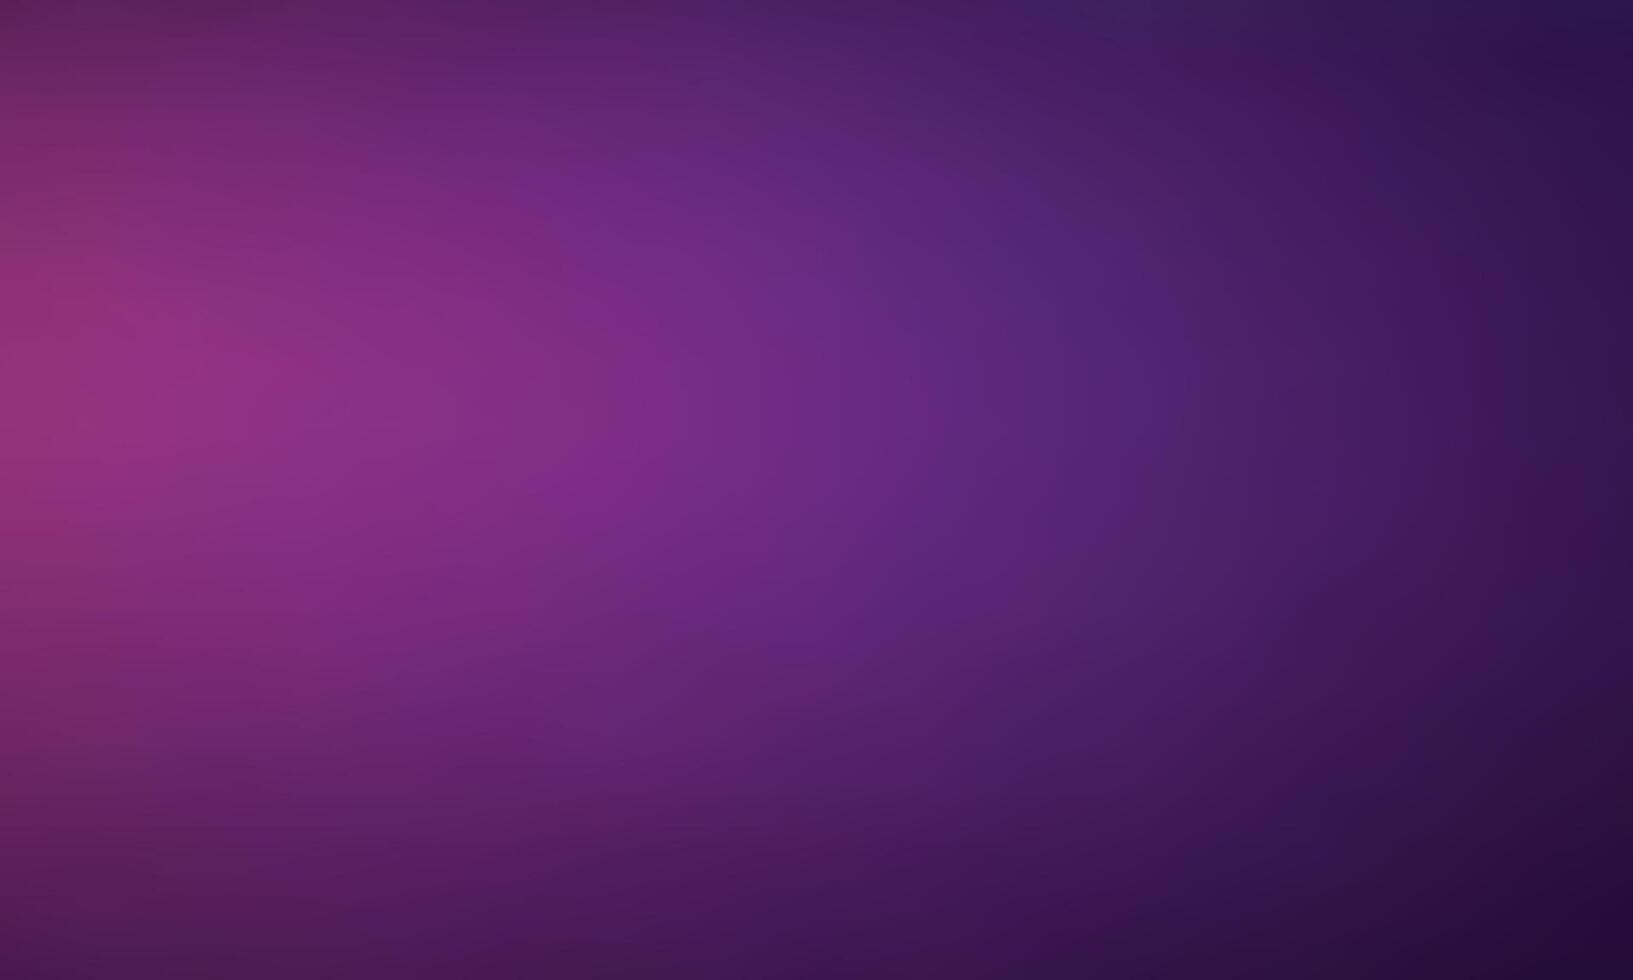 kreativ dunkel lila Gradient Hintergrund Illustration vektor